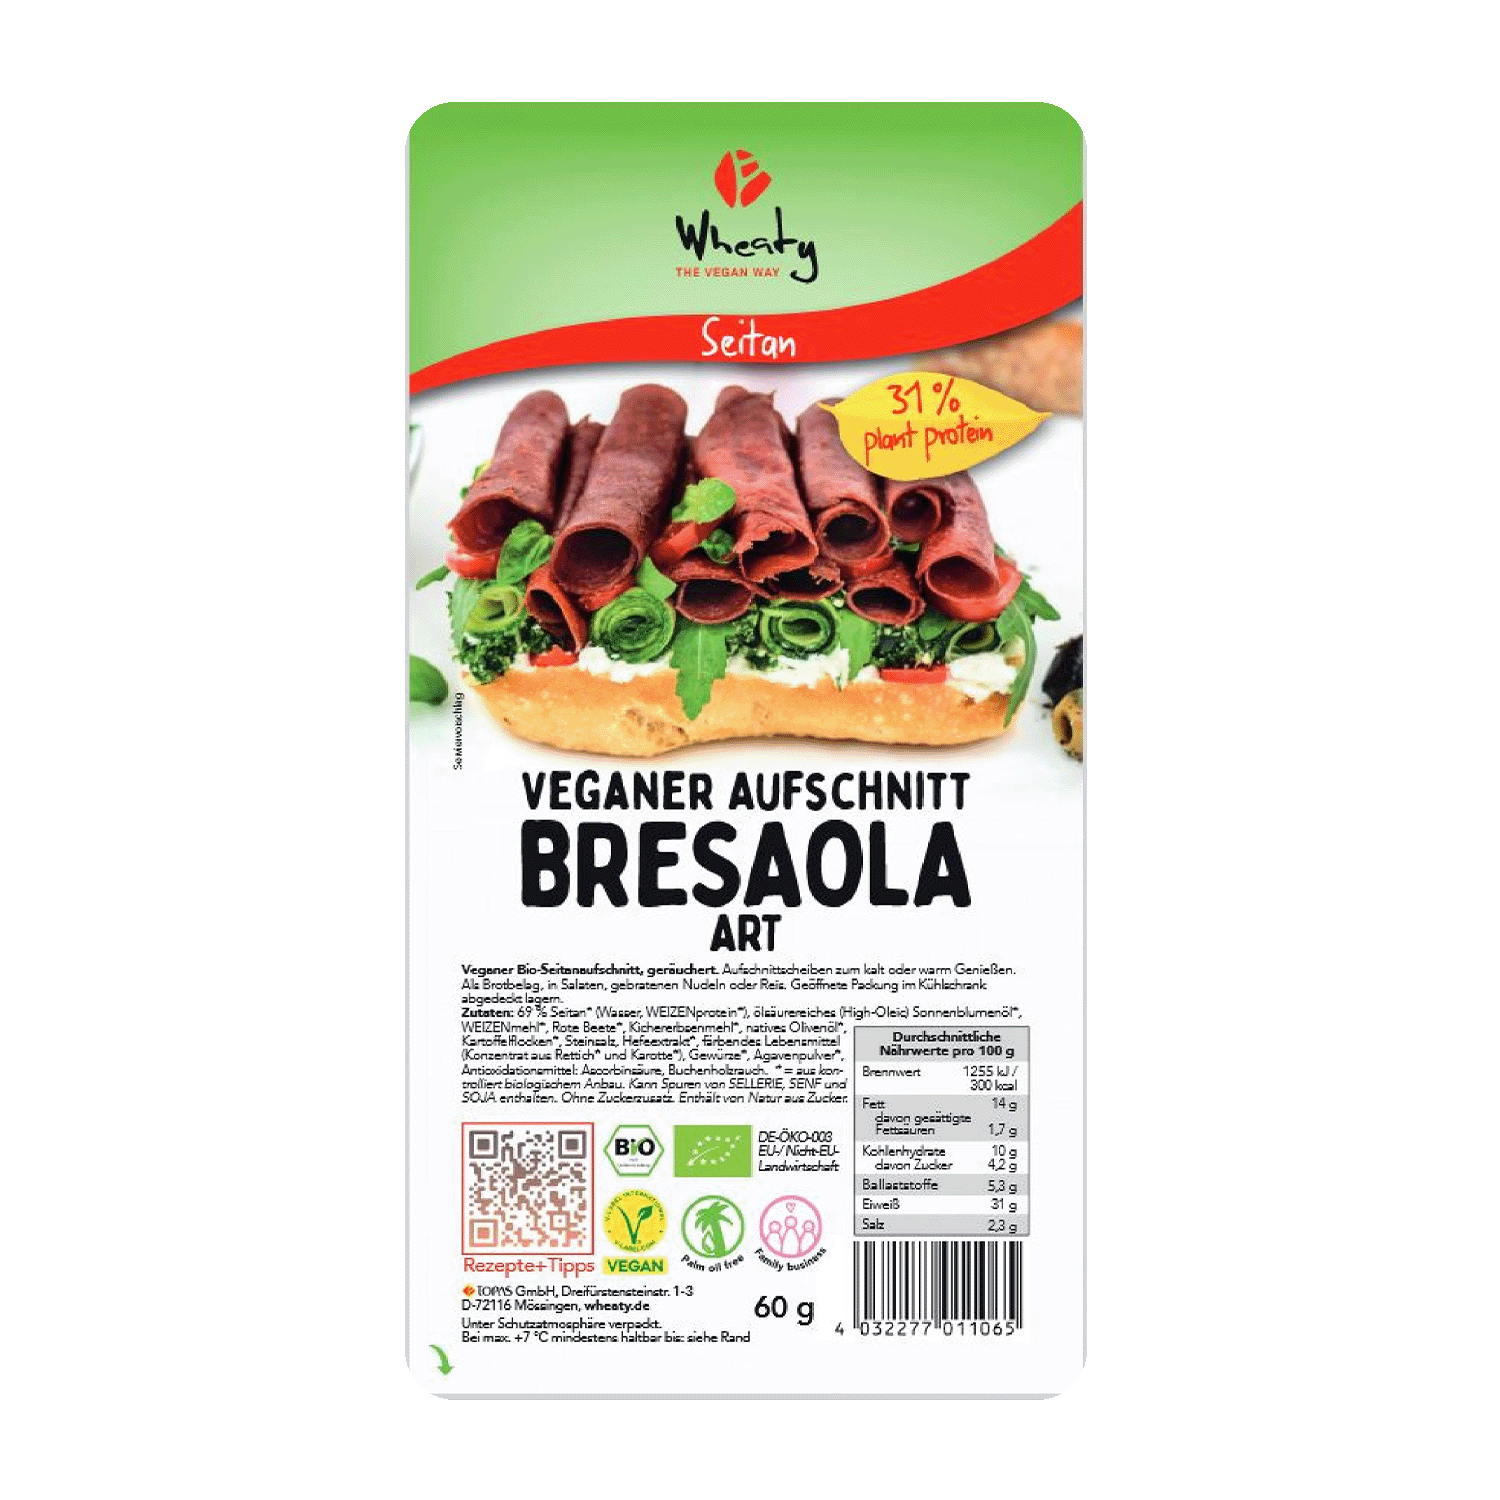 vegan cold cuts Bresaola style, Organic, 60g